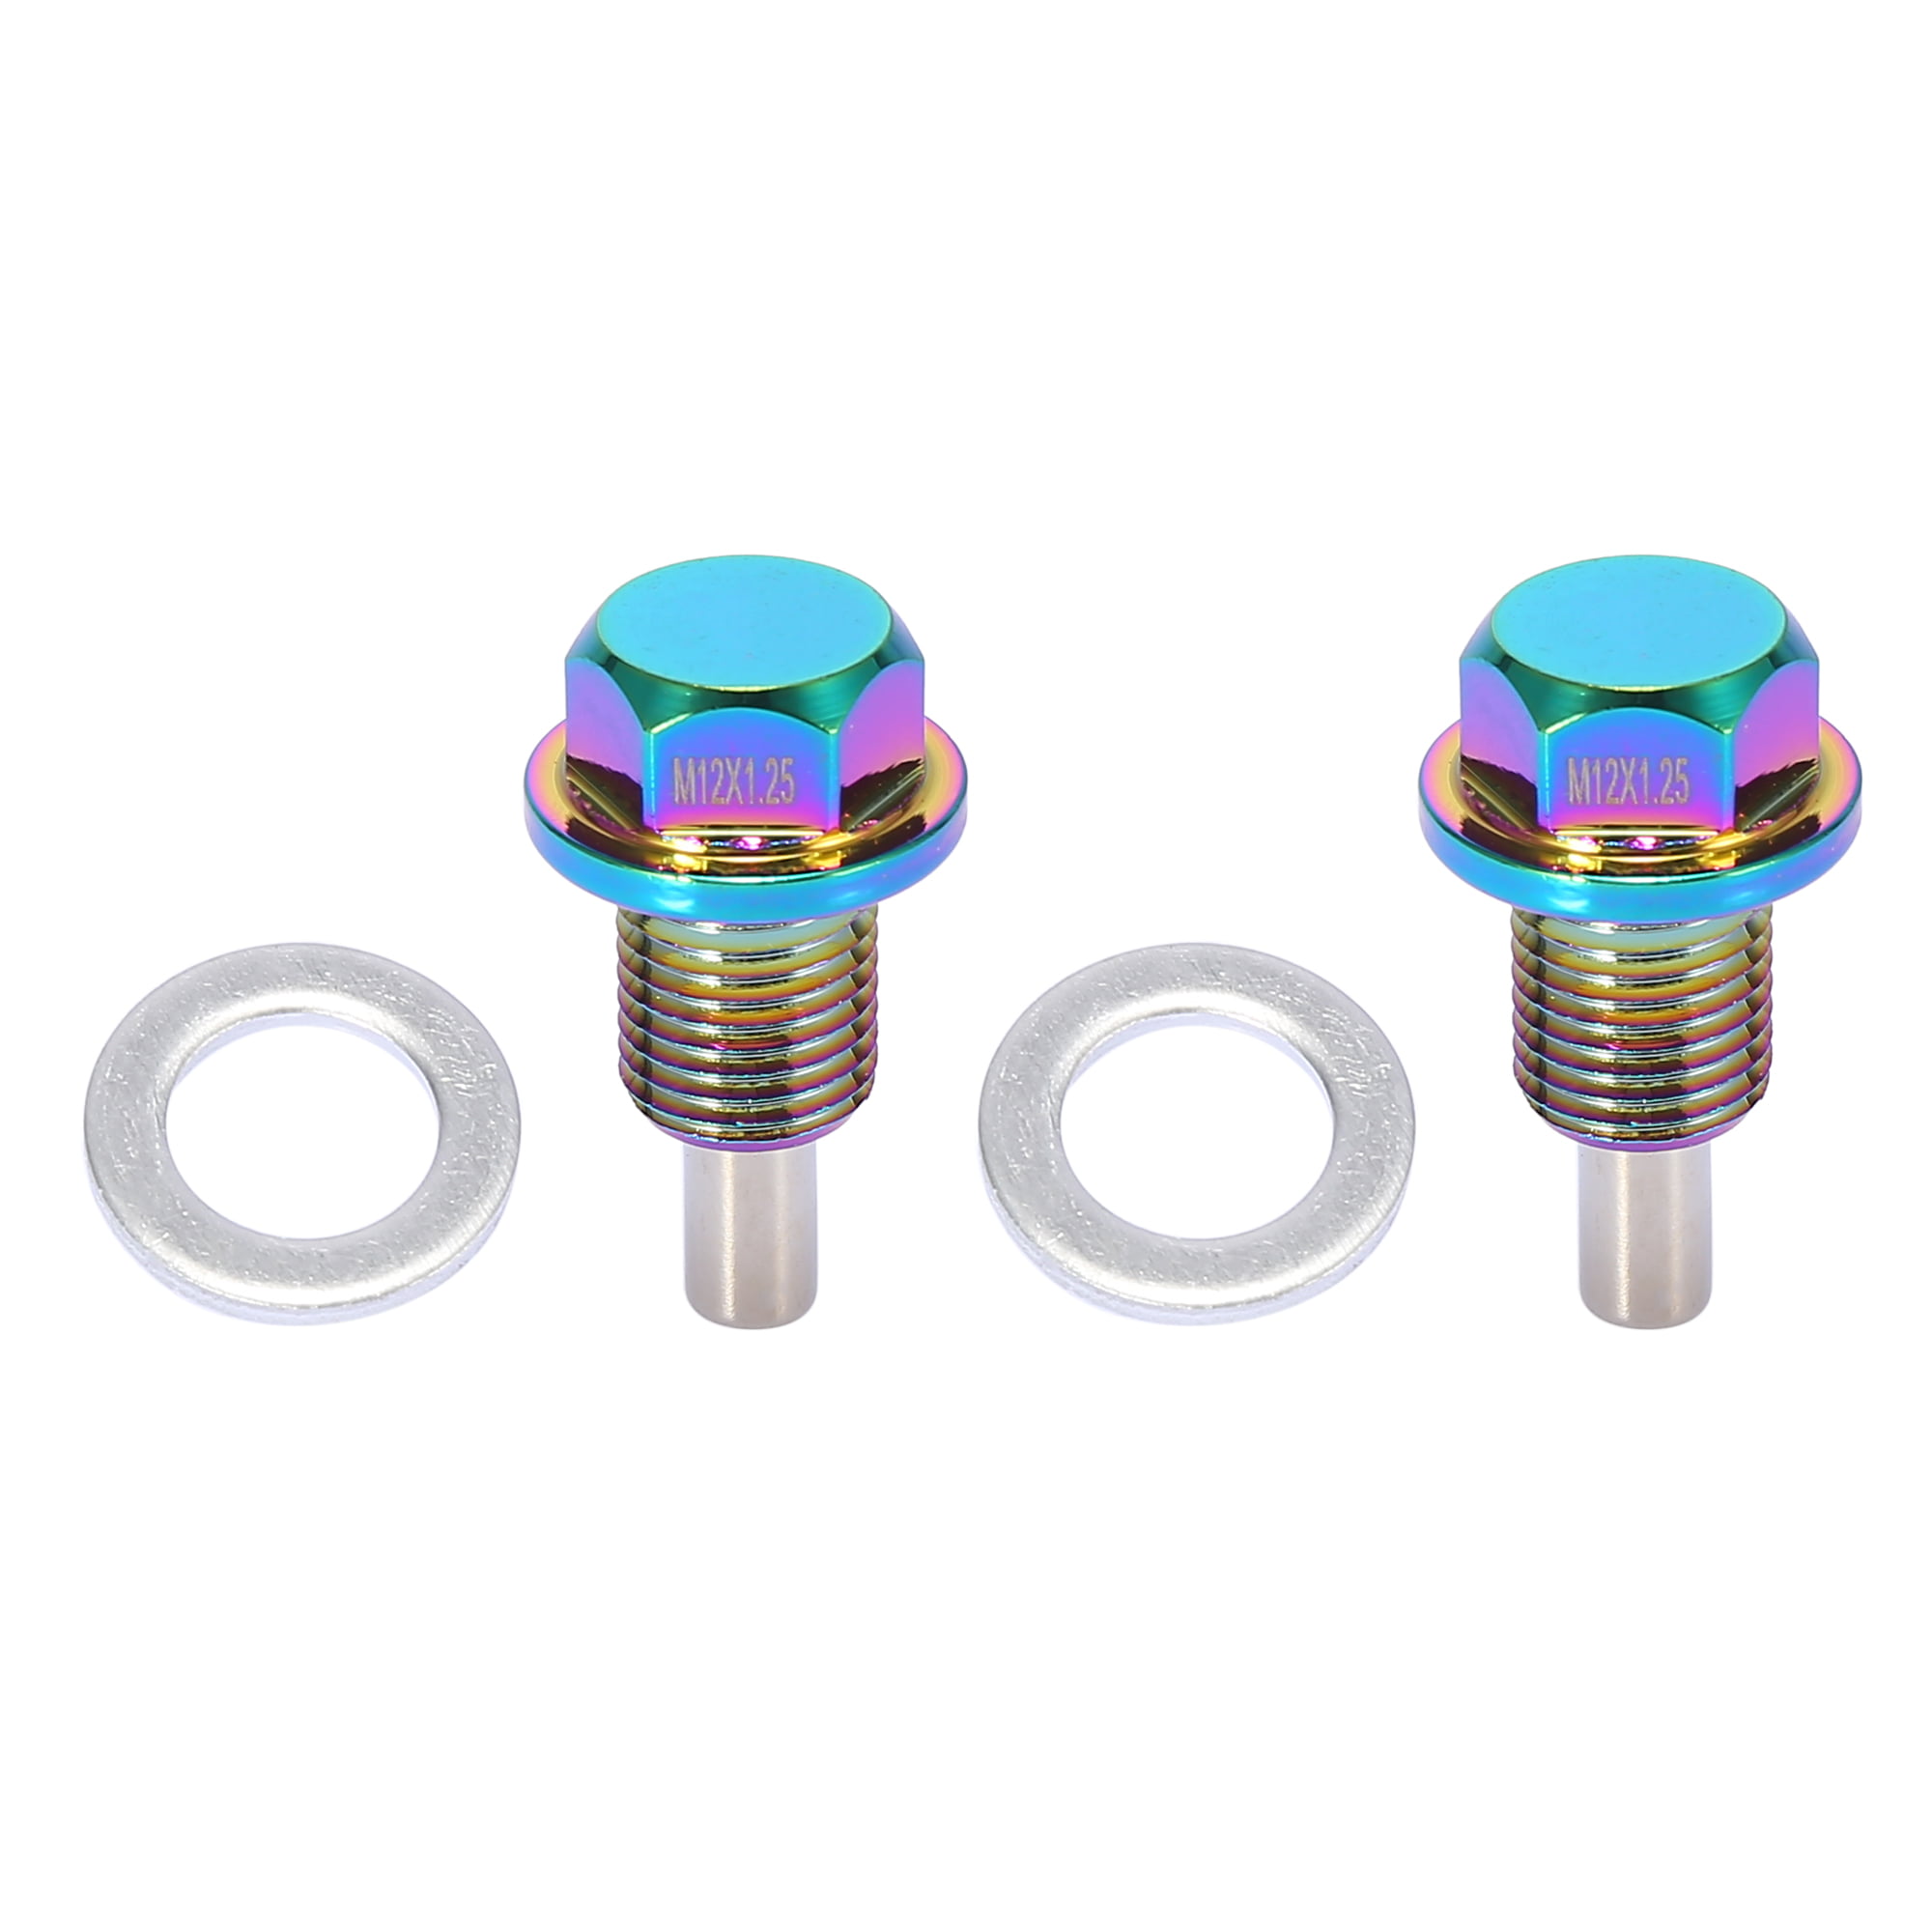 M12 x 1.5 Magnetic Oil Pan Drain Plug bolt and gasket Universal for Car Kits Set 